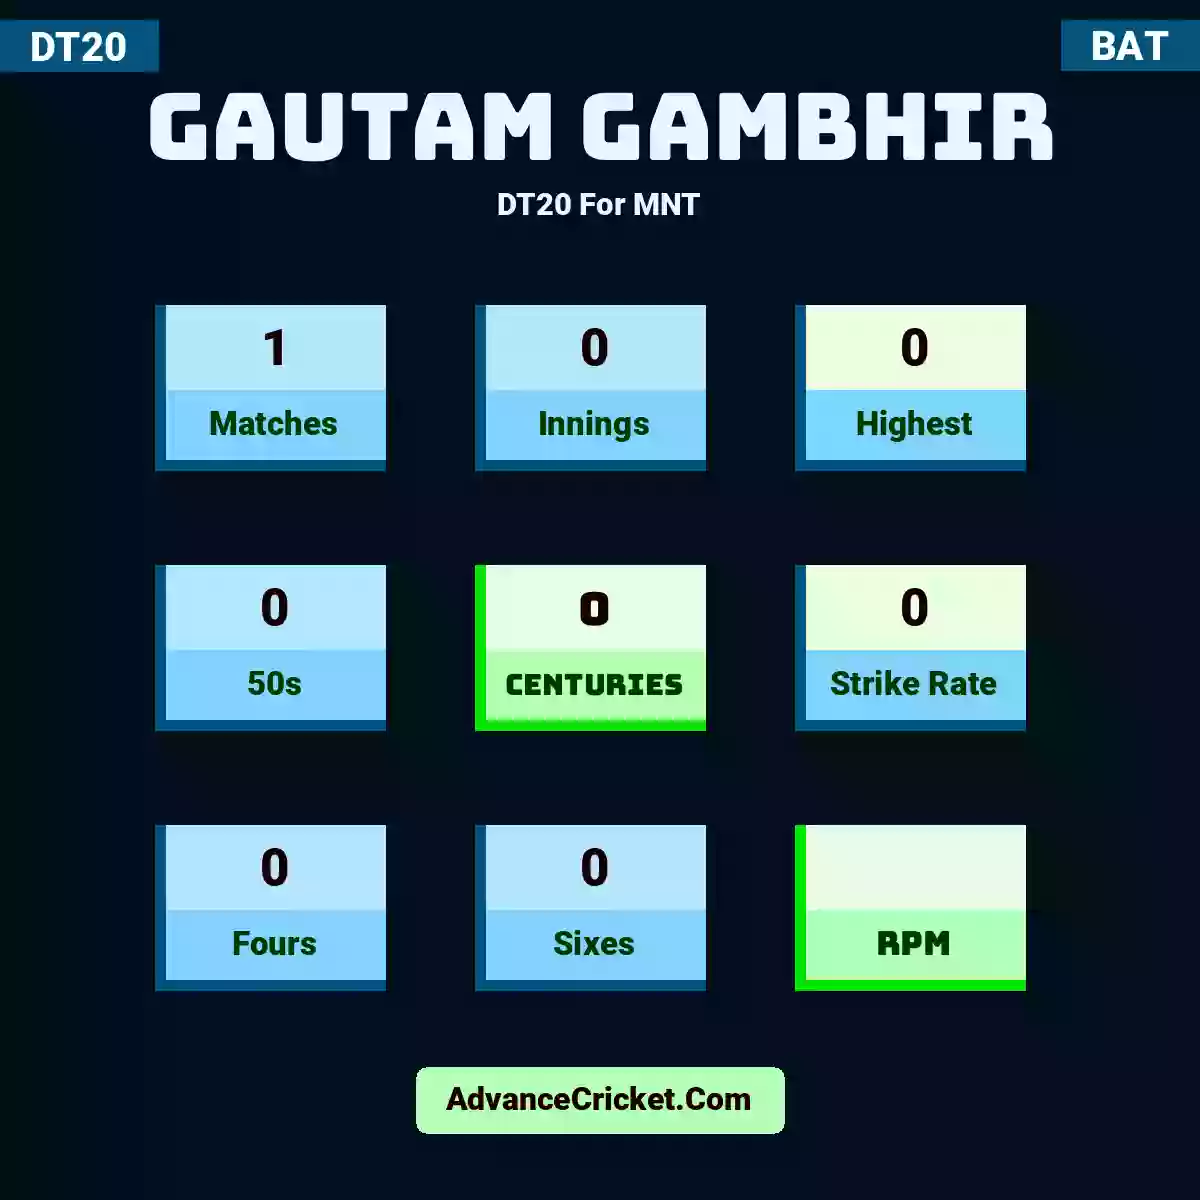 Gautam Gambhir DT20  For MNT, Gautam Gambhir played 1 matches, scored 0 runs as highest, 0 half-centuries, and 0 centuries, with a strike rate of 0. G.Gambhir hit 0 fours and 0 sixes.